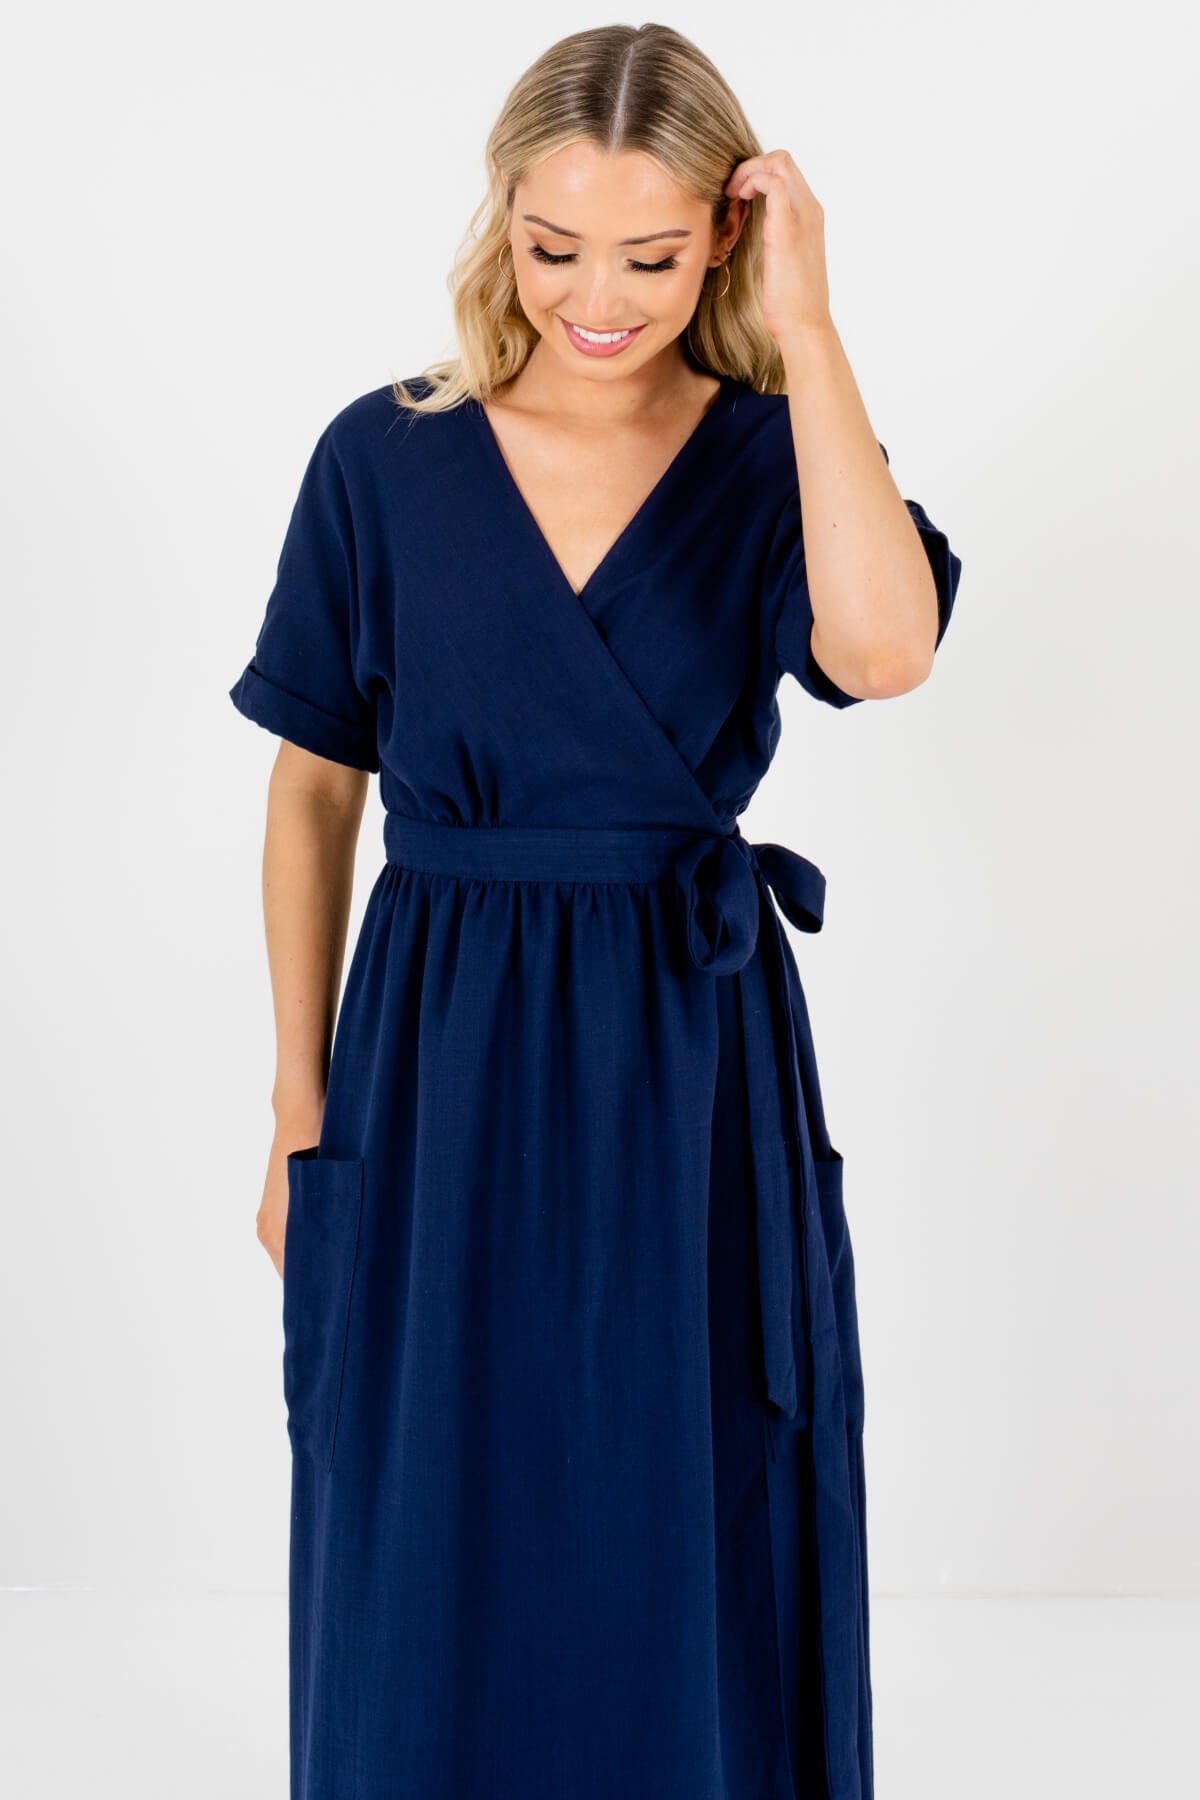 Blue Wrap Dress Maxi Online, 58% OFF | www.crispersonaltrainer.com